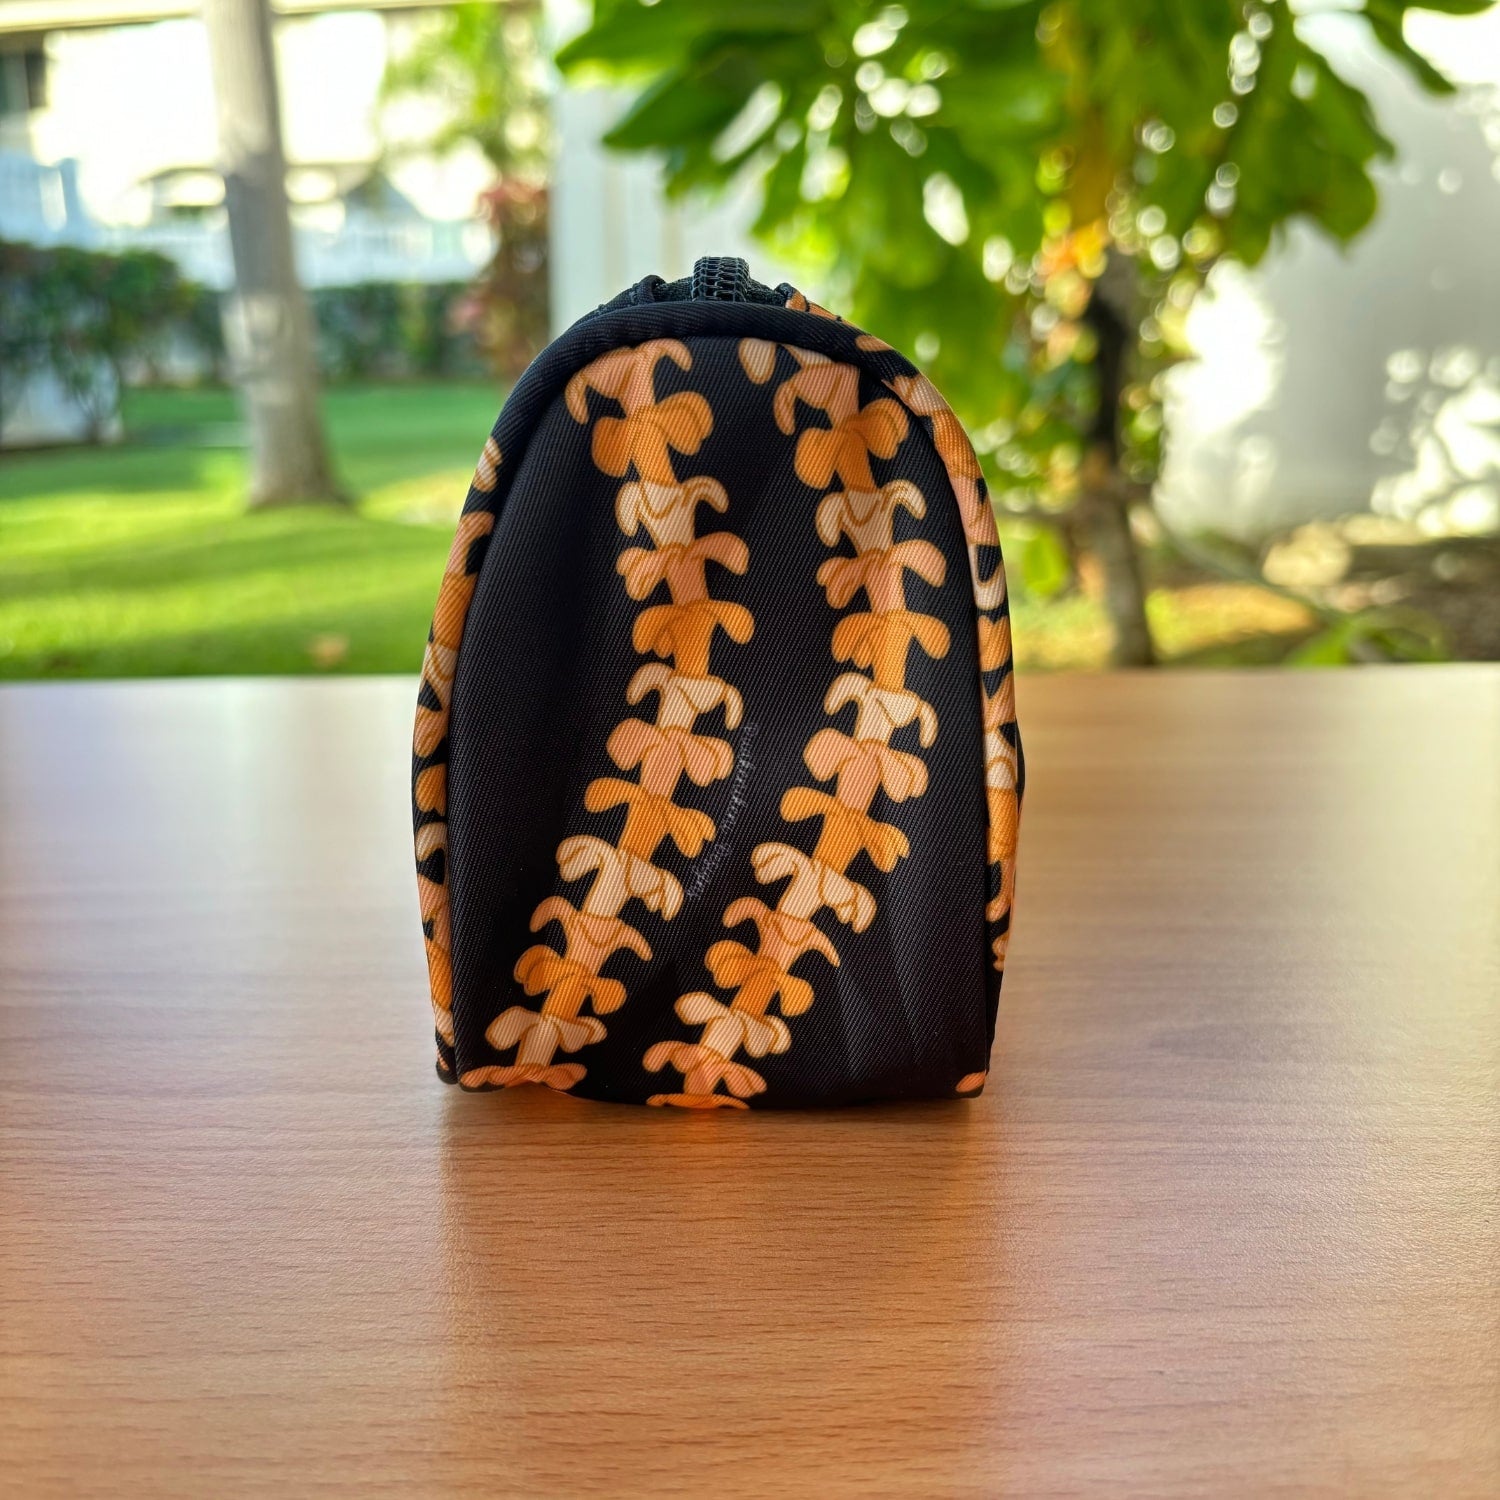 Mini Zipper Pouch - make-up bag, clutch, wristlet, with puakenikeni lei design from Puakenikeni Designs side view